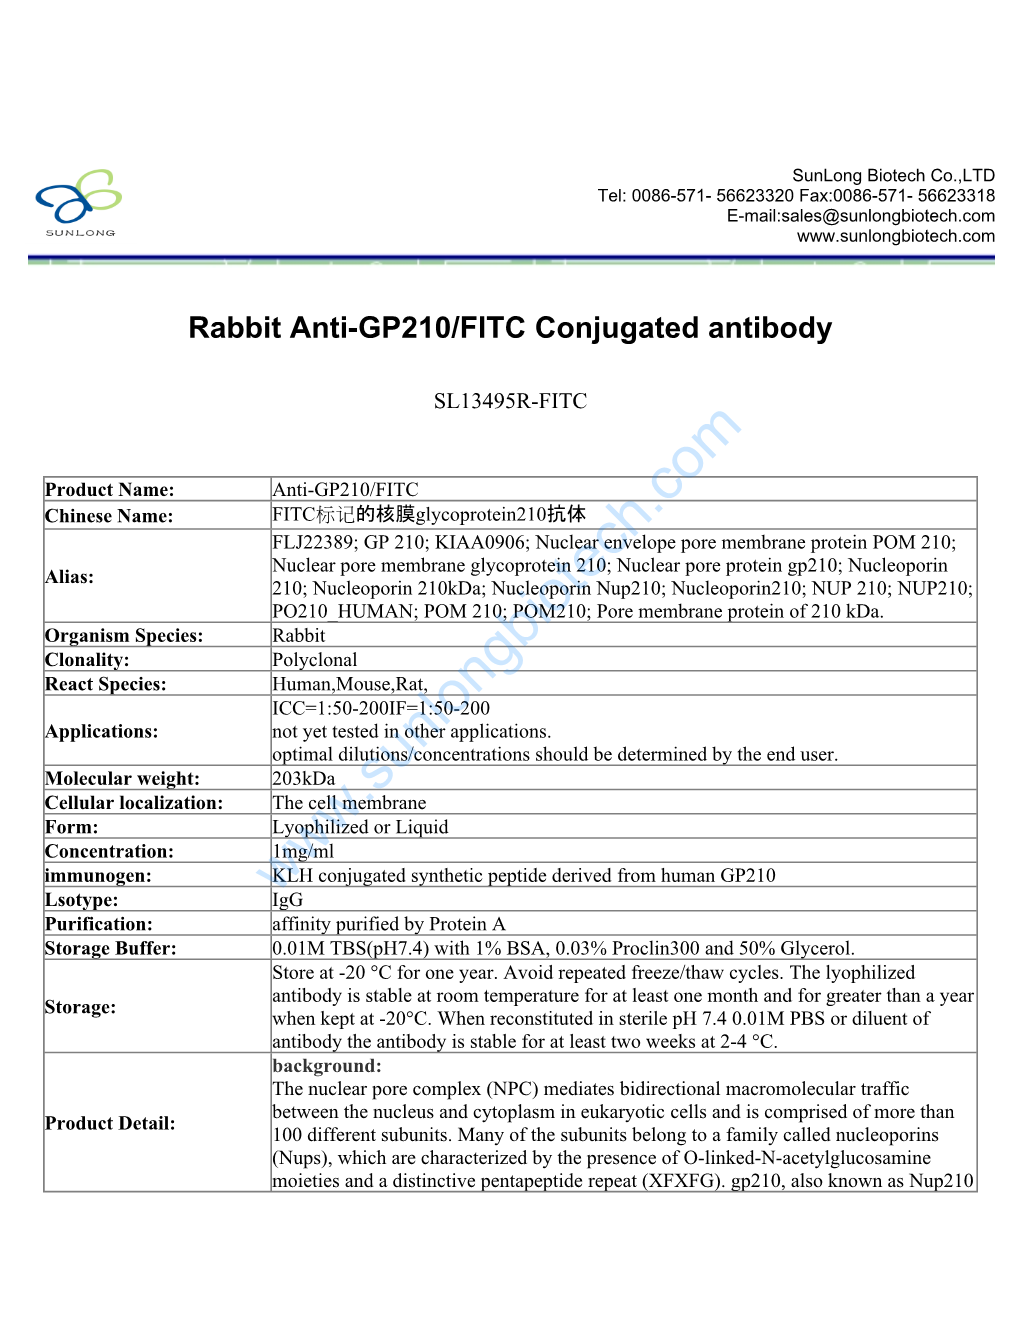 Rabbit Anti-GP210/FITC Conjugated Antibody